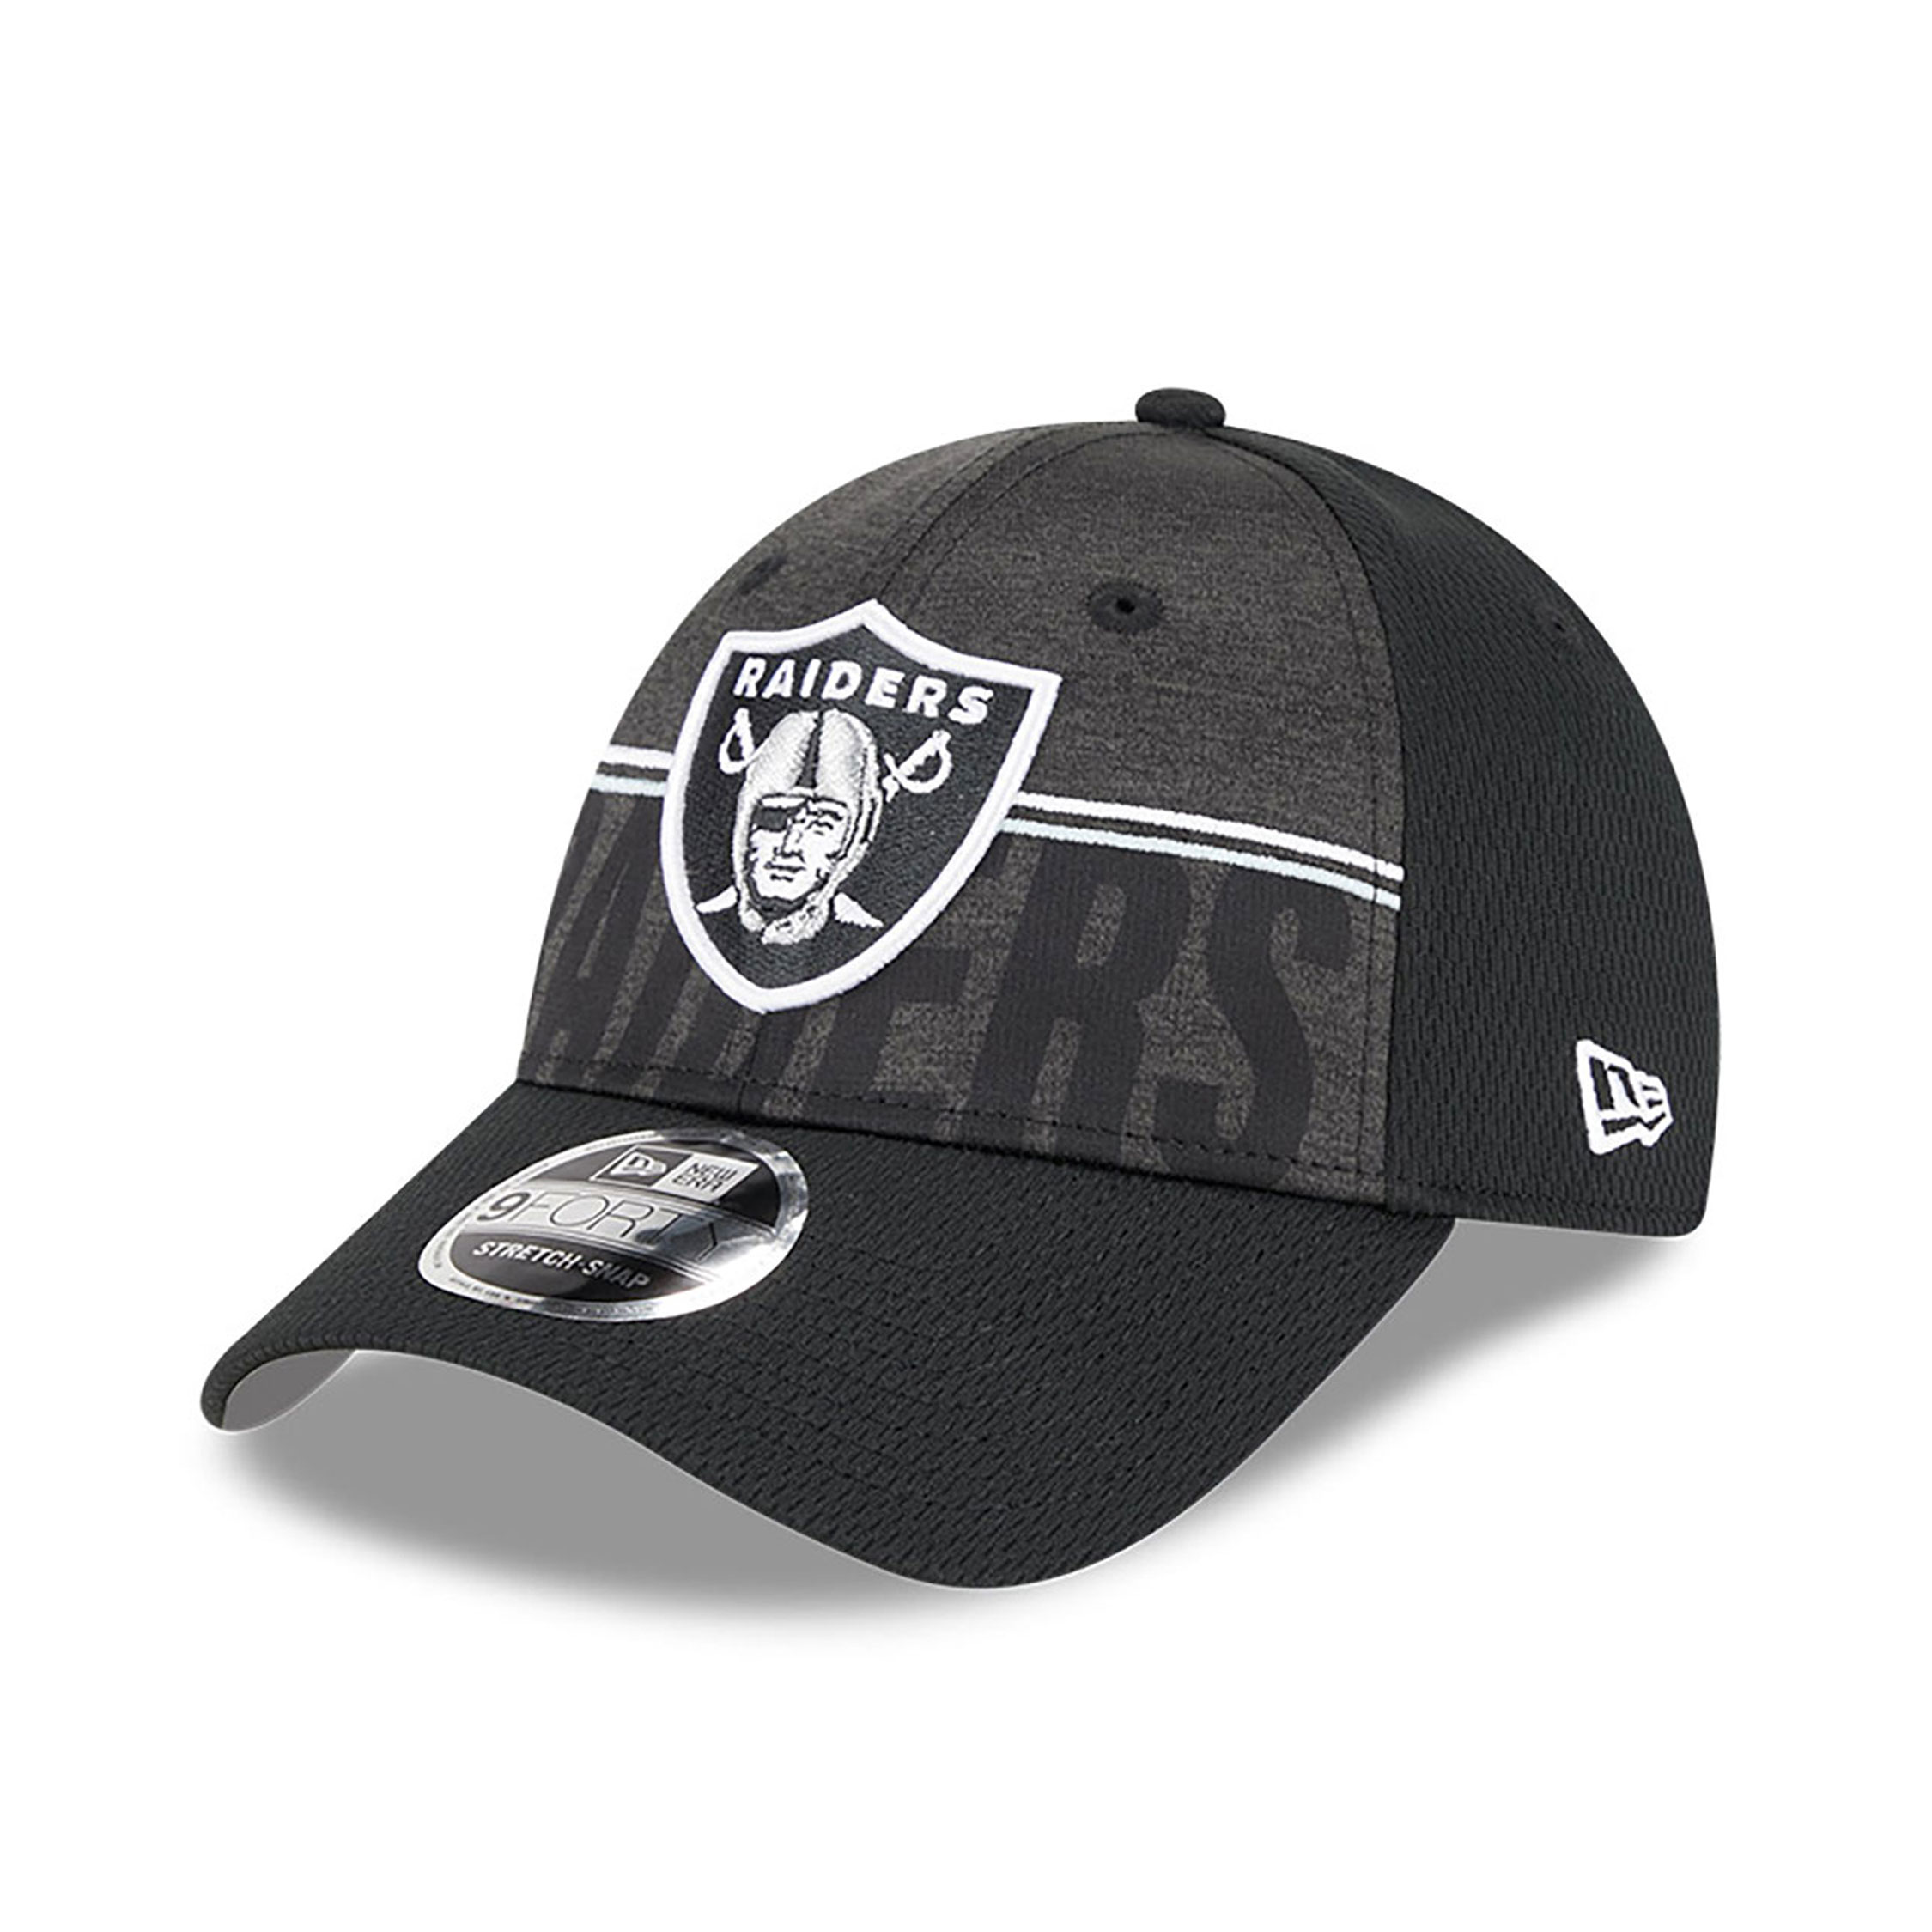 Las Vegas Raiders Caps, Hats & Clothing | New Era Cap UK